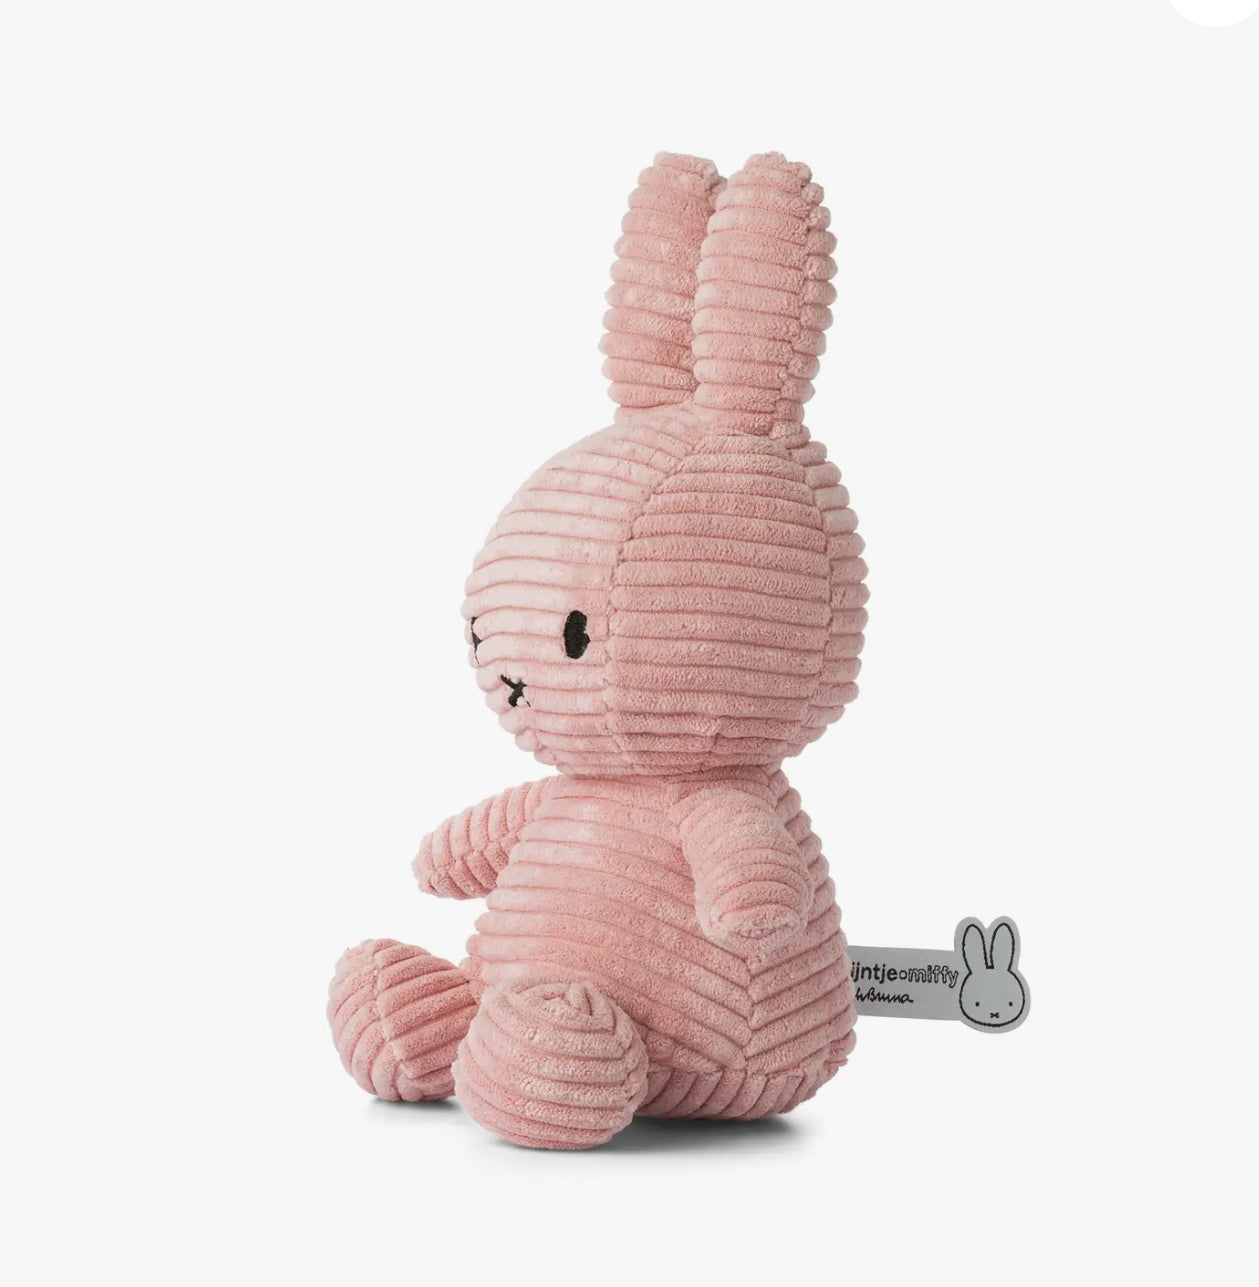 Miffy Pink Corduroy Soft Toy